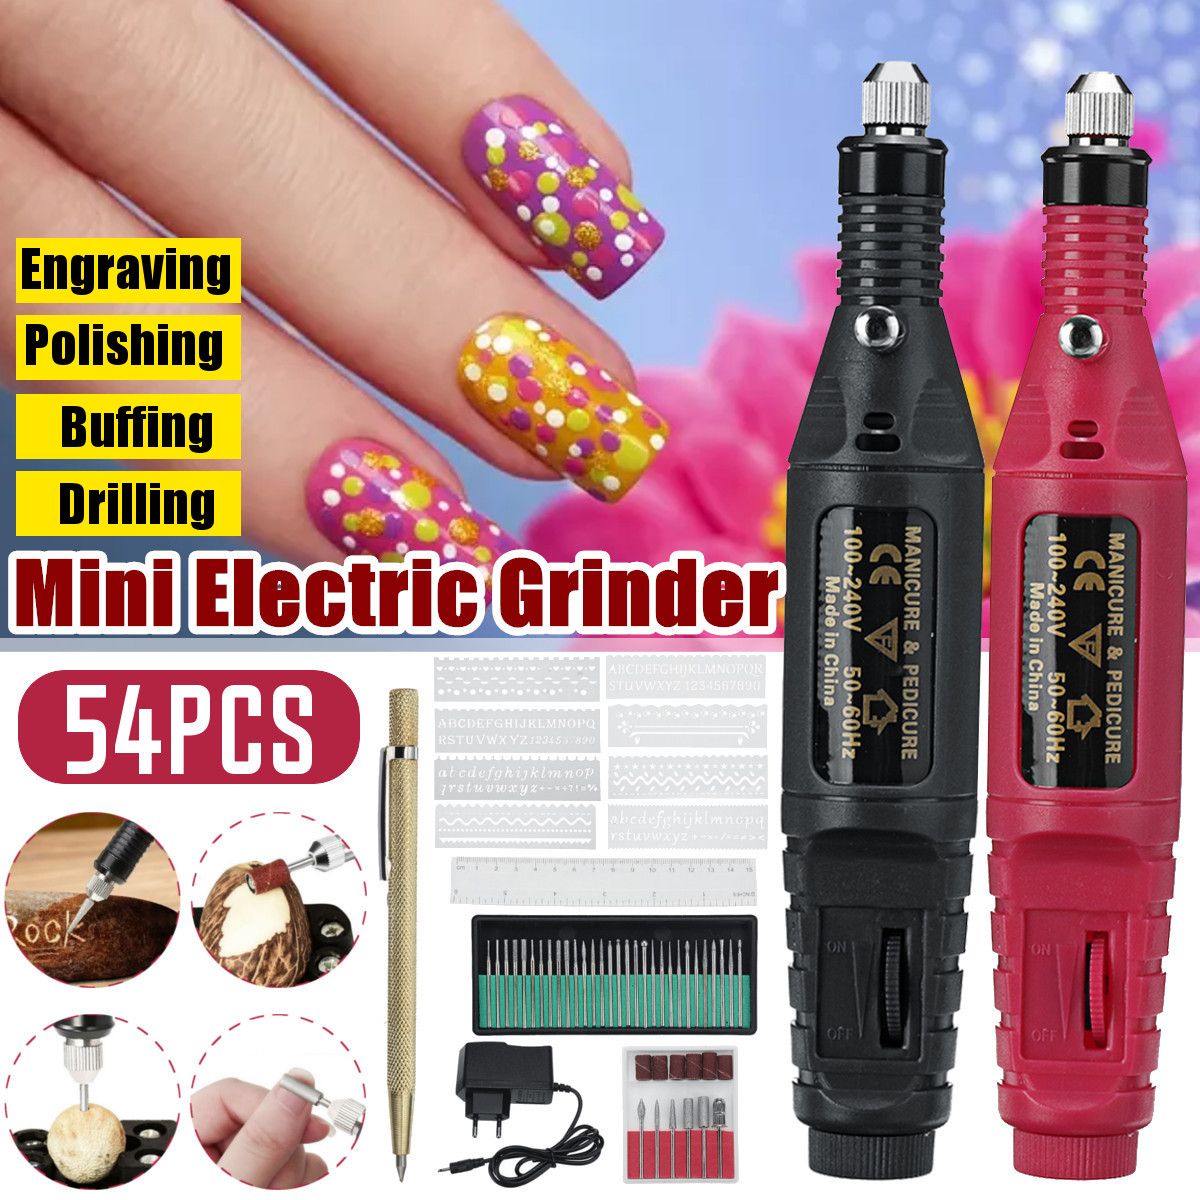 12V-54Pcs-Electric-Engraving-Pen-Kit-Regulated-Speed-Mini-DIY-Etching-Drilling-Polishing-Pen-For-Jew-1684916